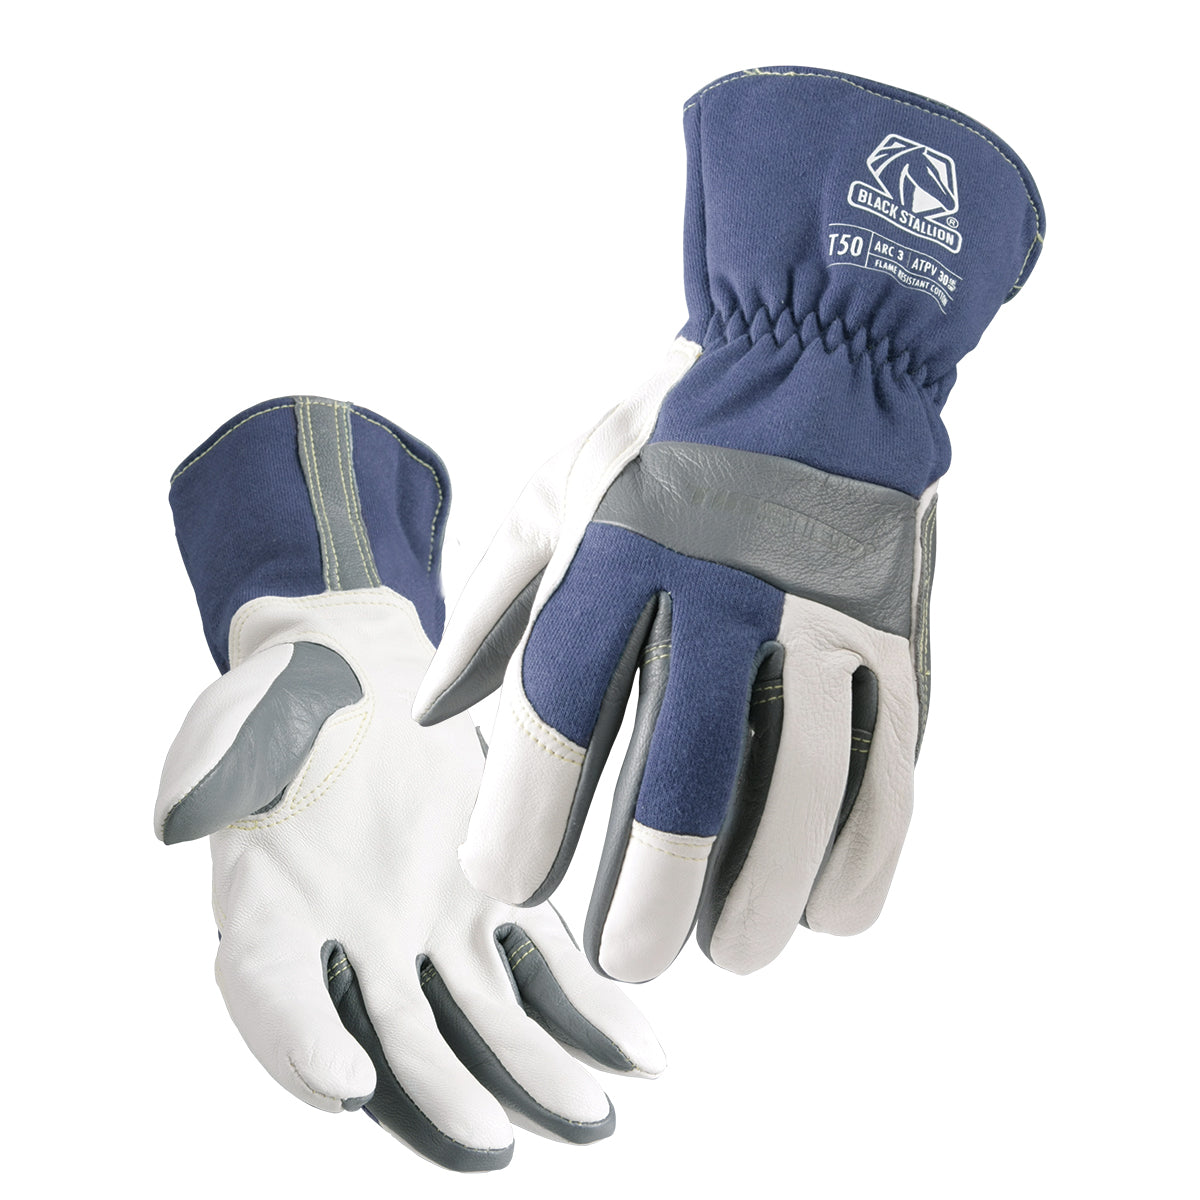 Grain Kidskin And Fr Snug Fit Cotton Multi-Feature Tig Welding Gloves - T50